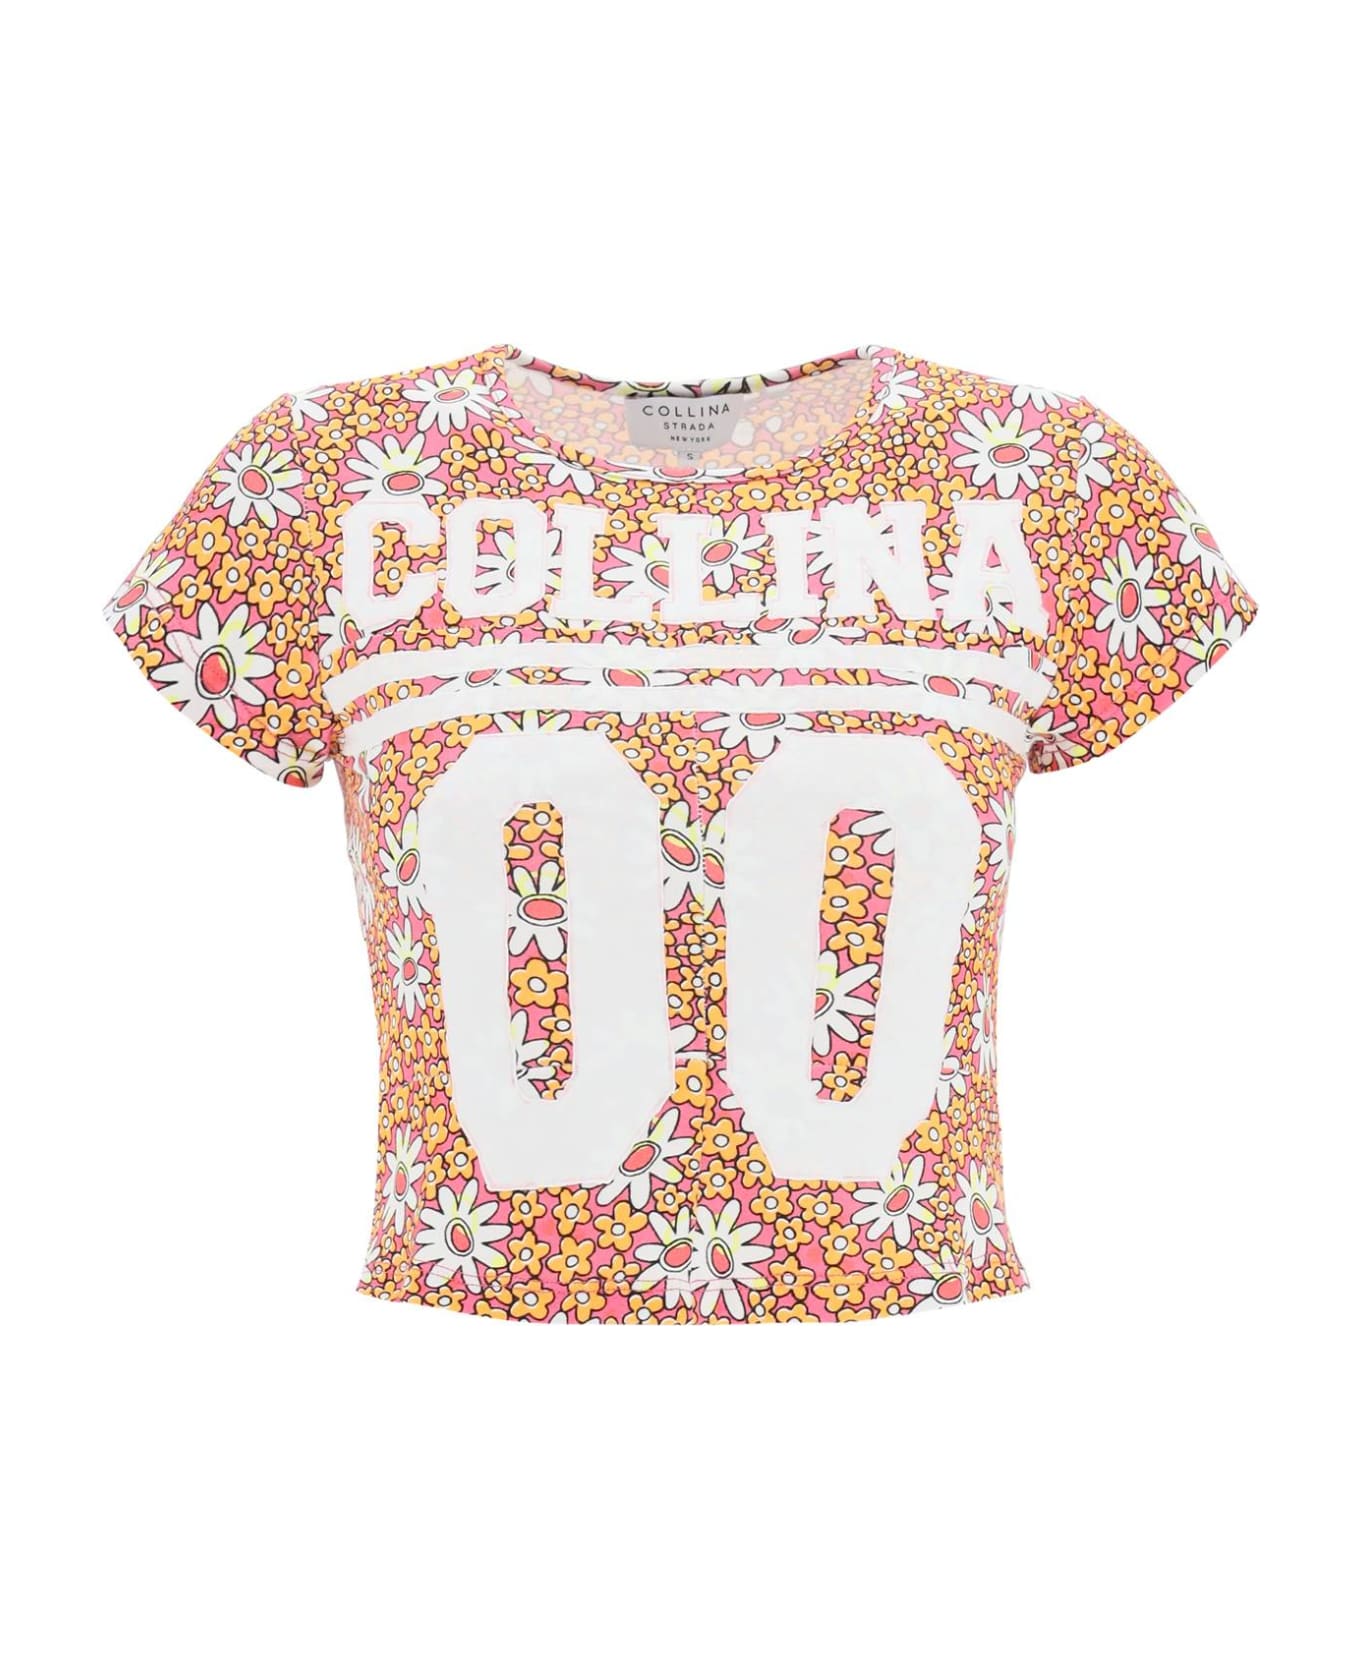 Collina Strada 'hi-liter' Cropped T-shirt - HI LITER FLORAL (Orange)